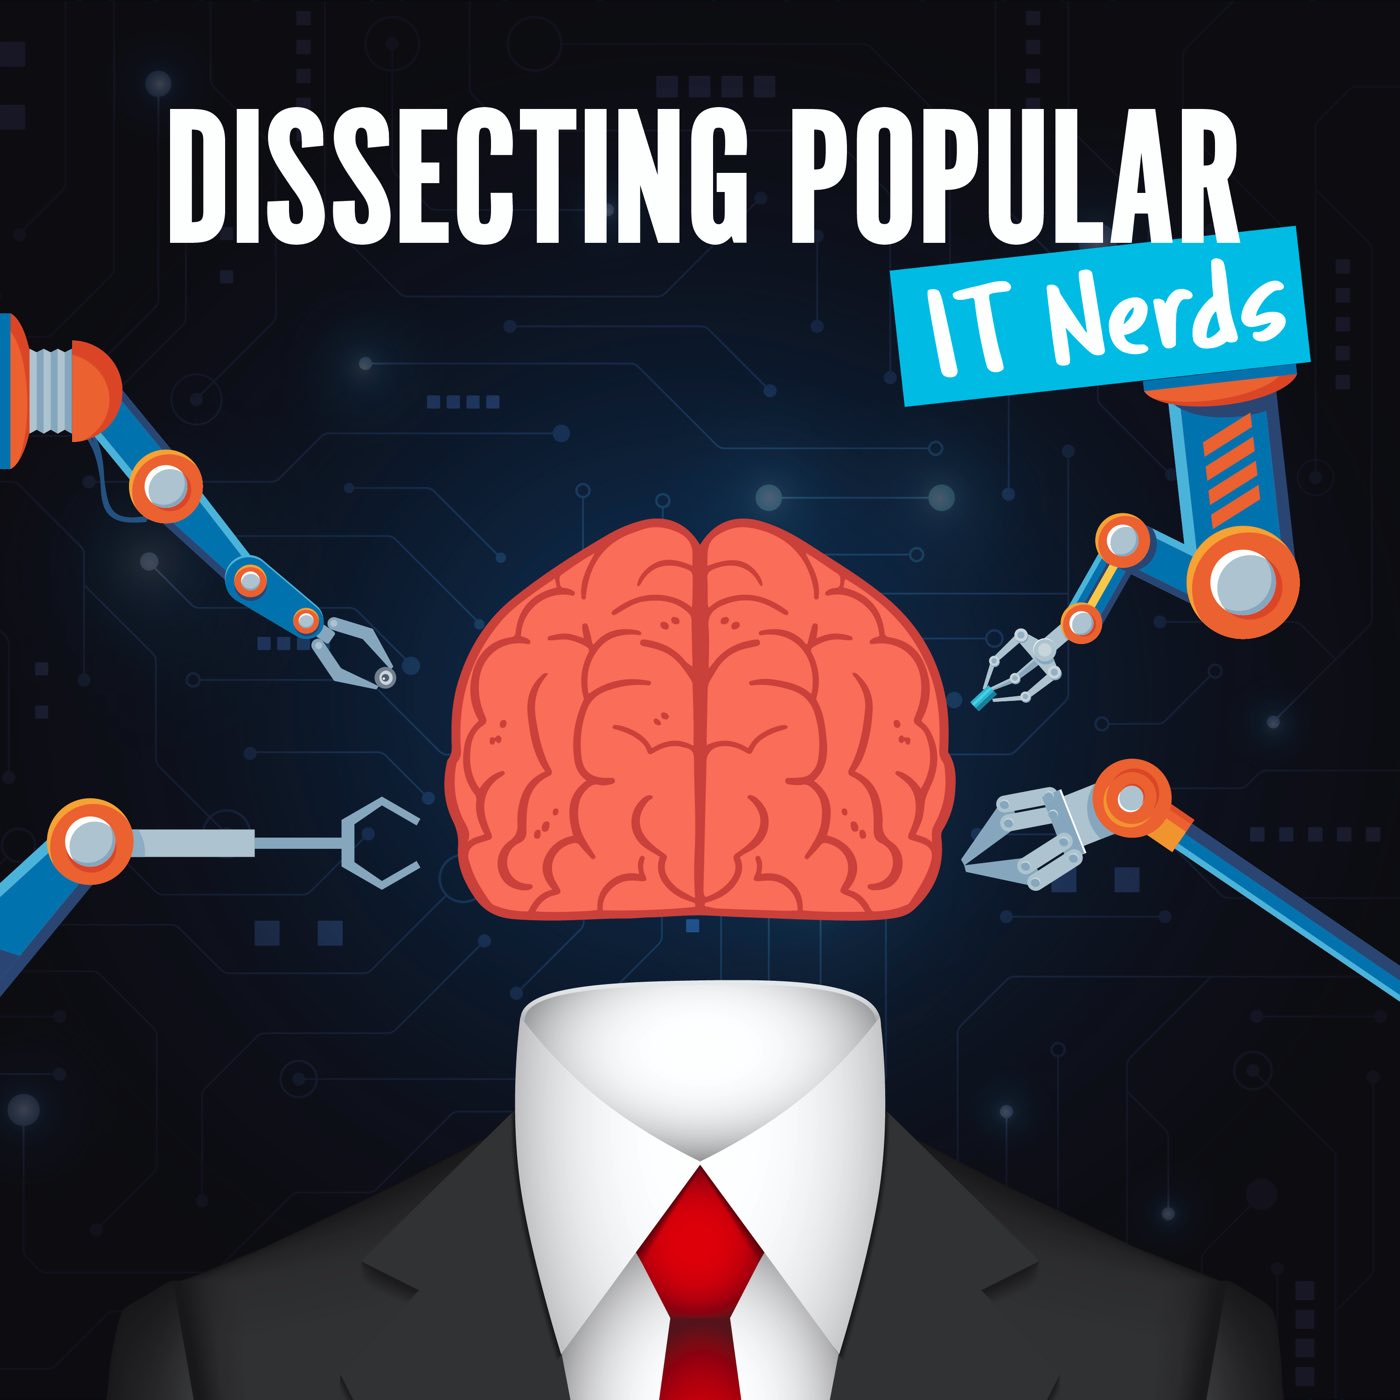 Dissecting Popular IT Nerds